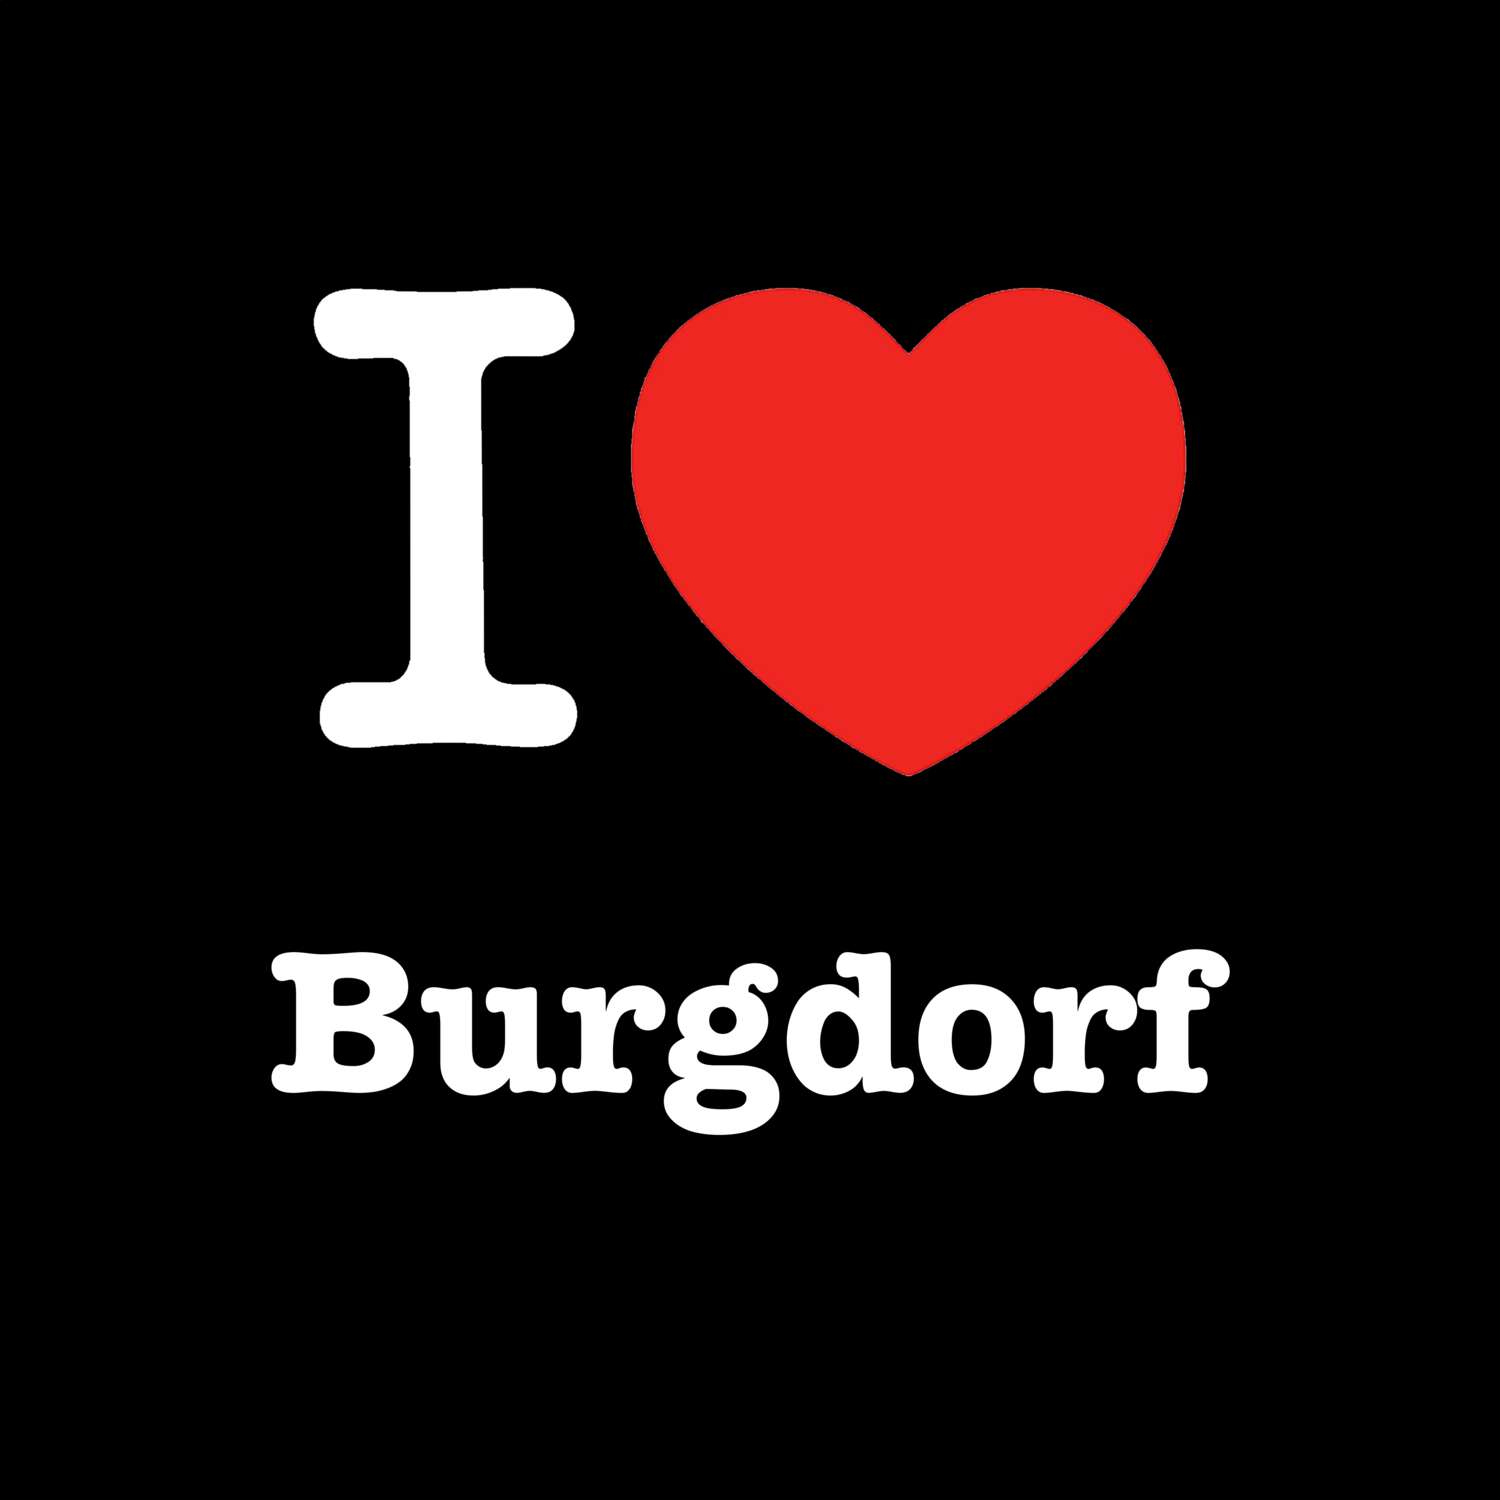 Burgdorf T-Shirt »I love«